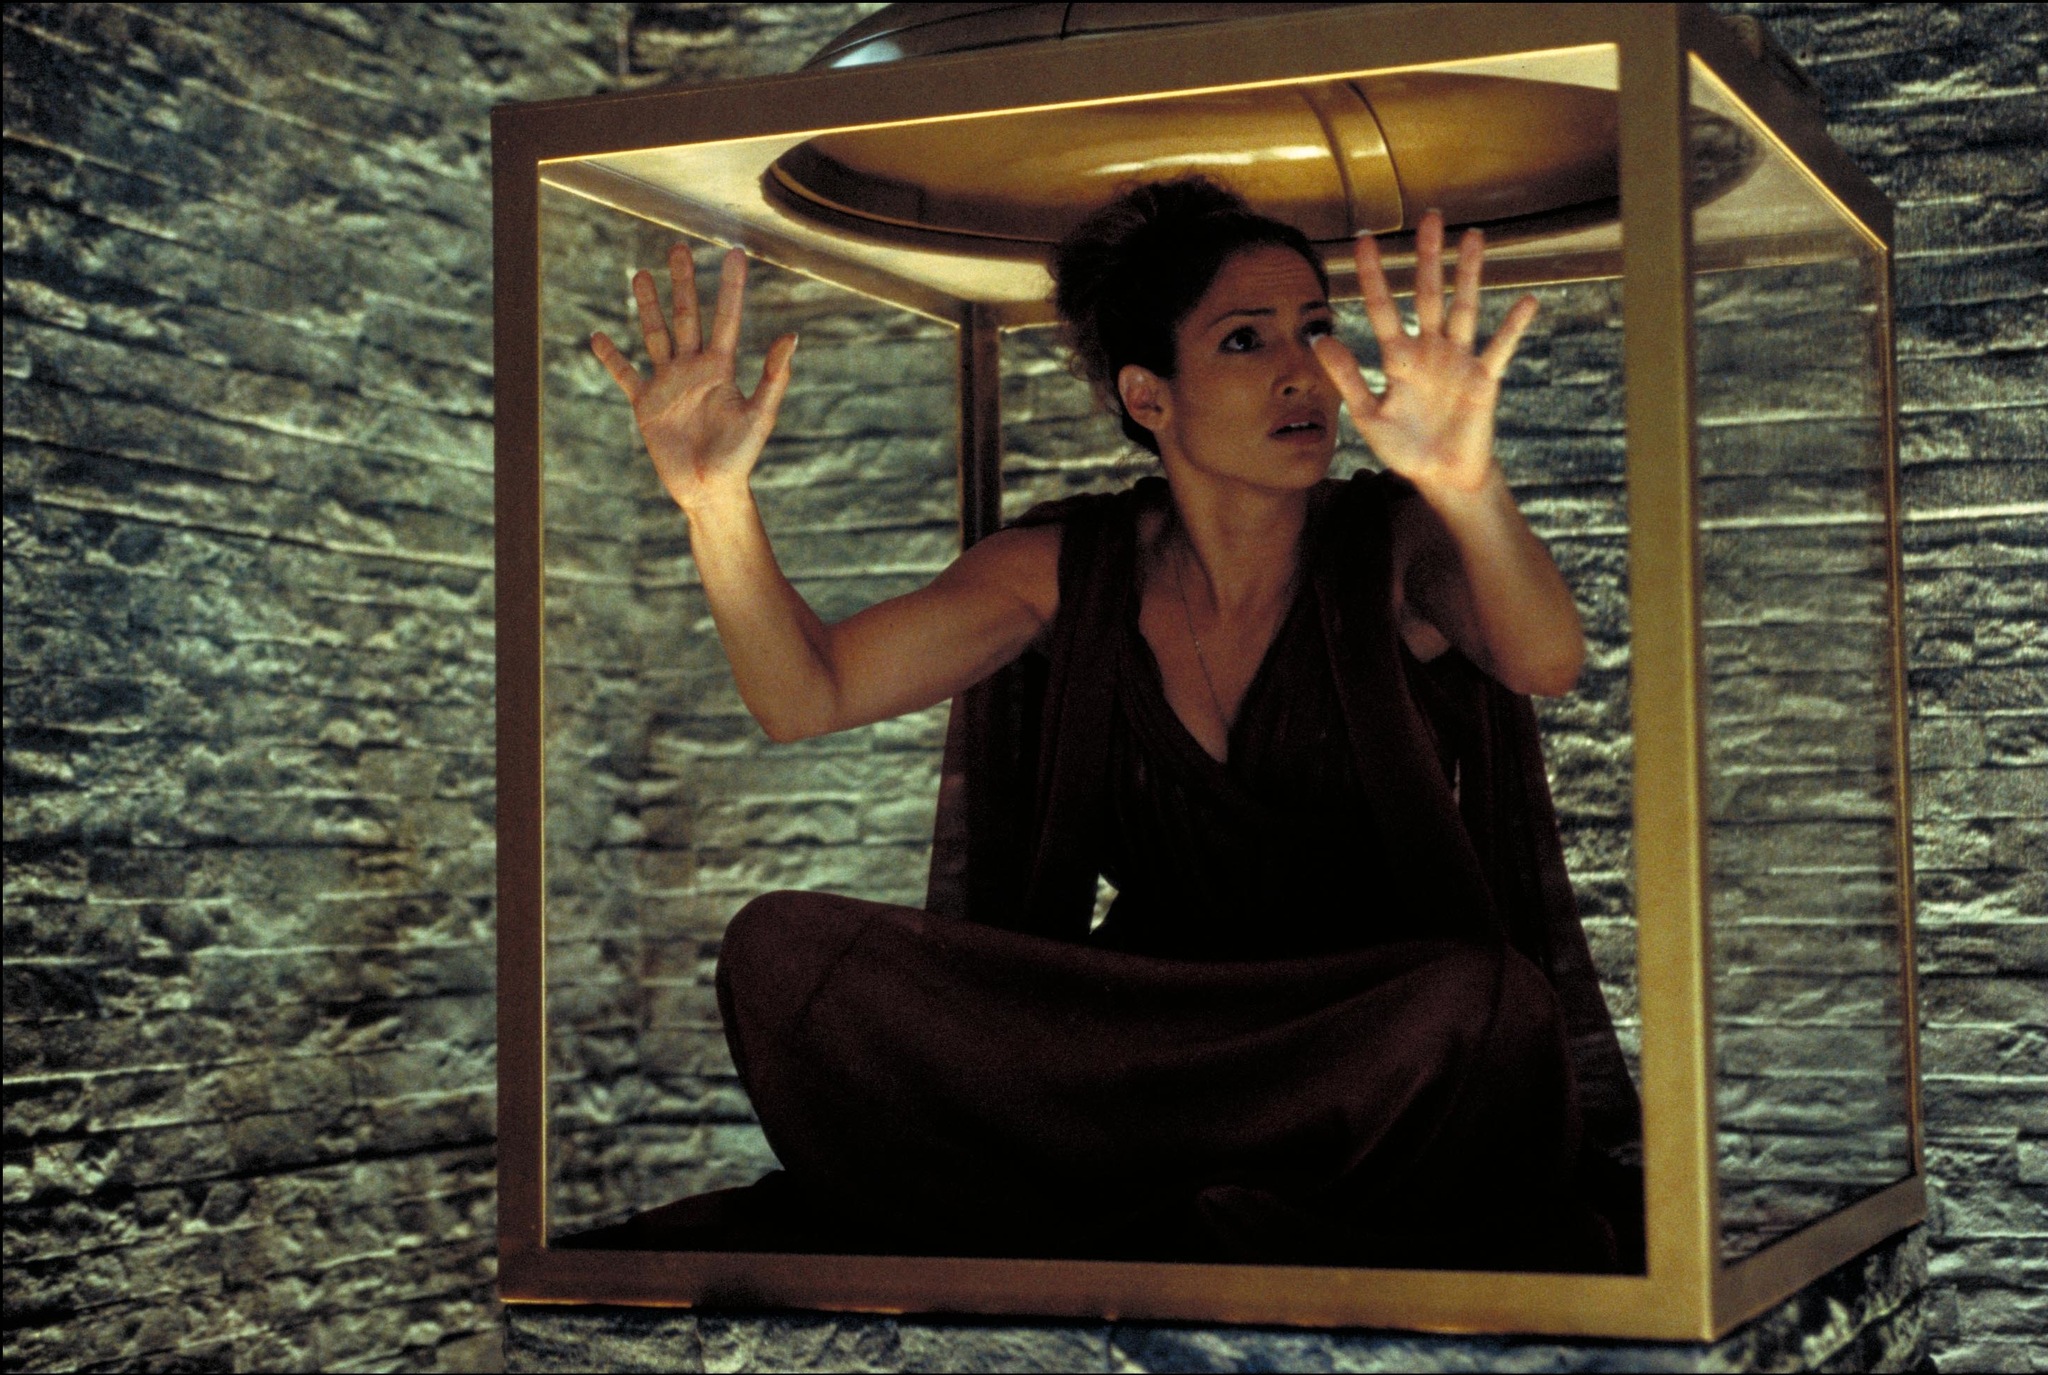 Still of Jennifer Lopez in The Cell (2000)